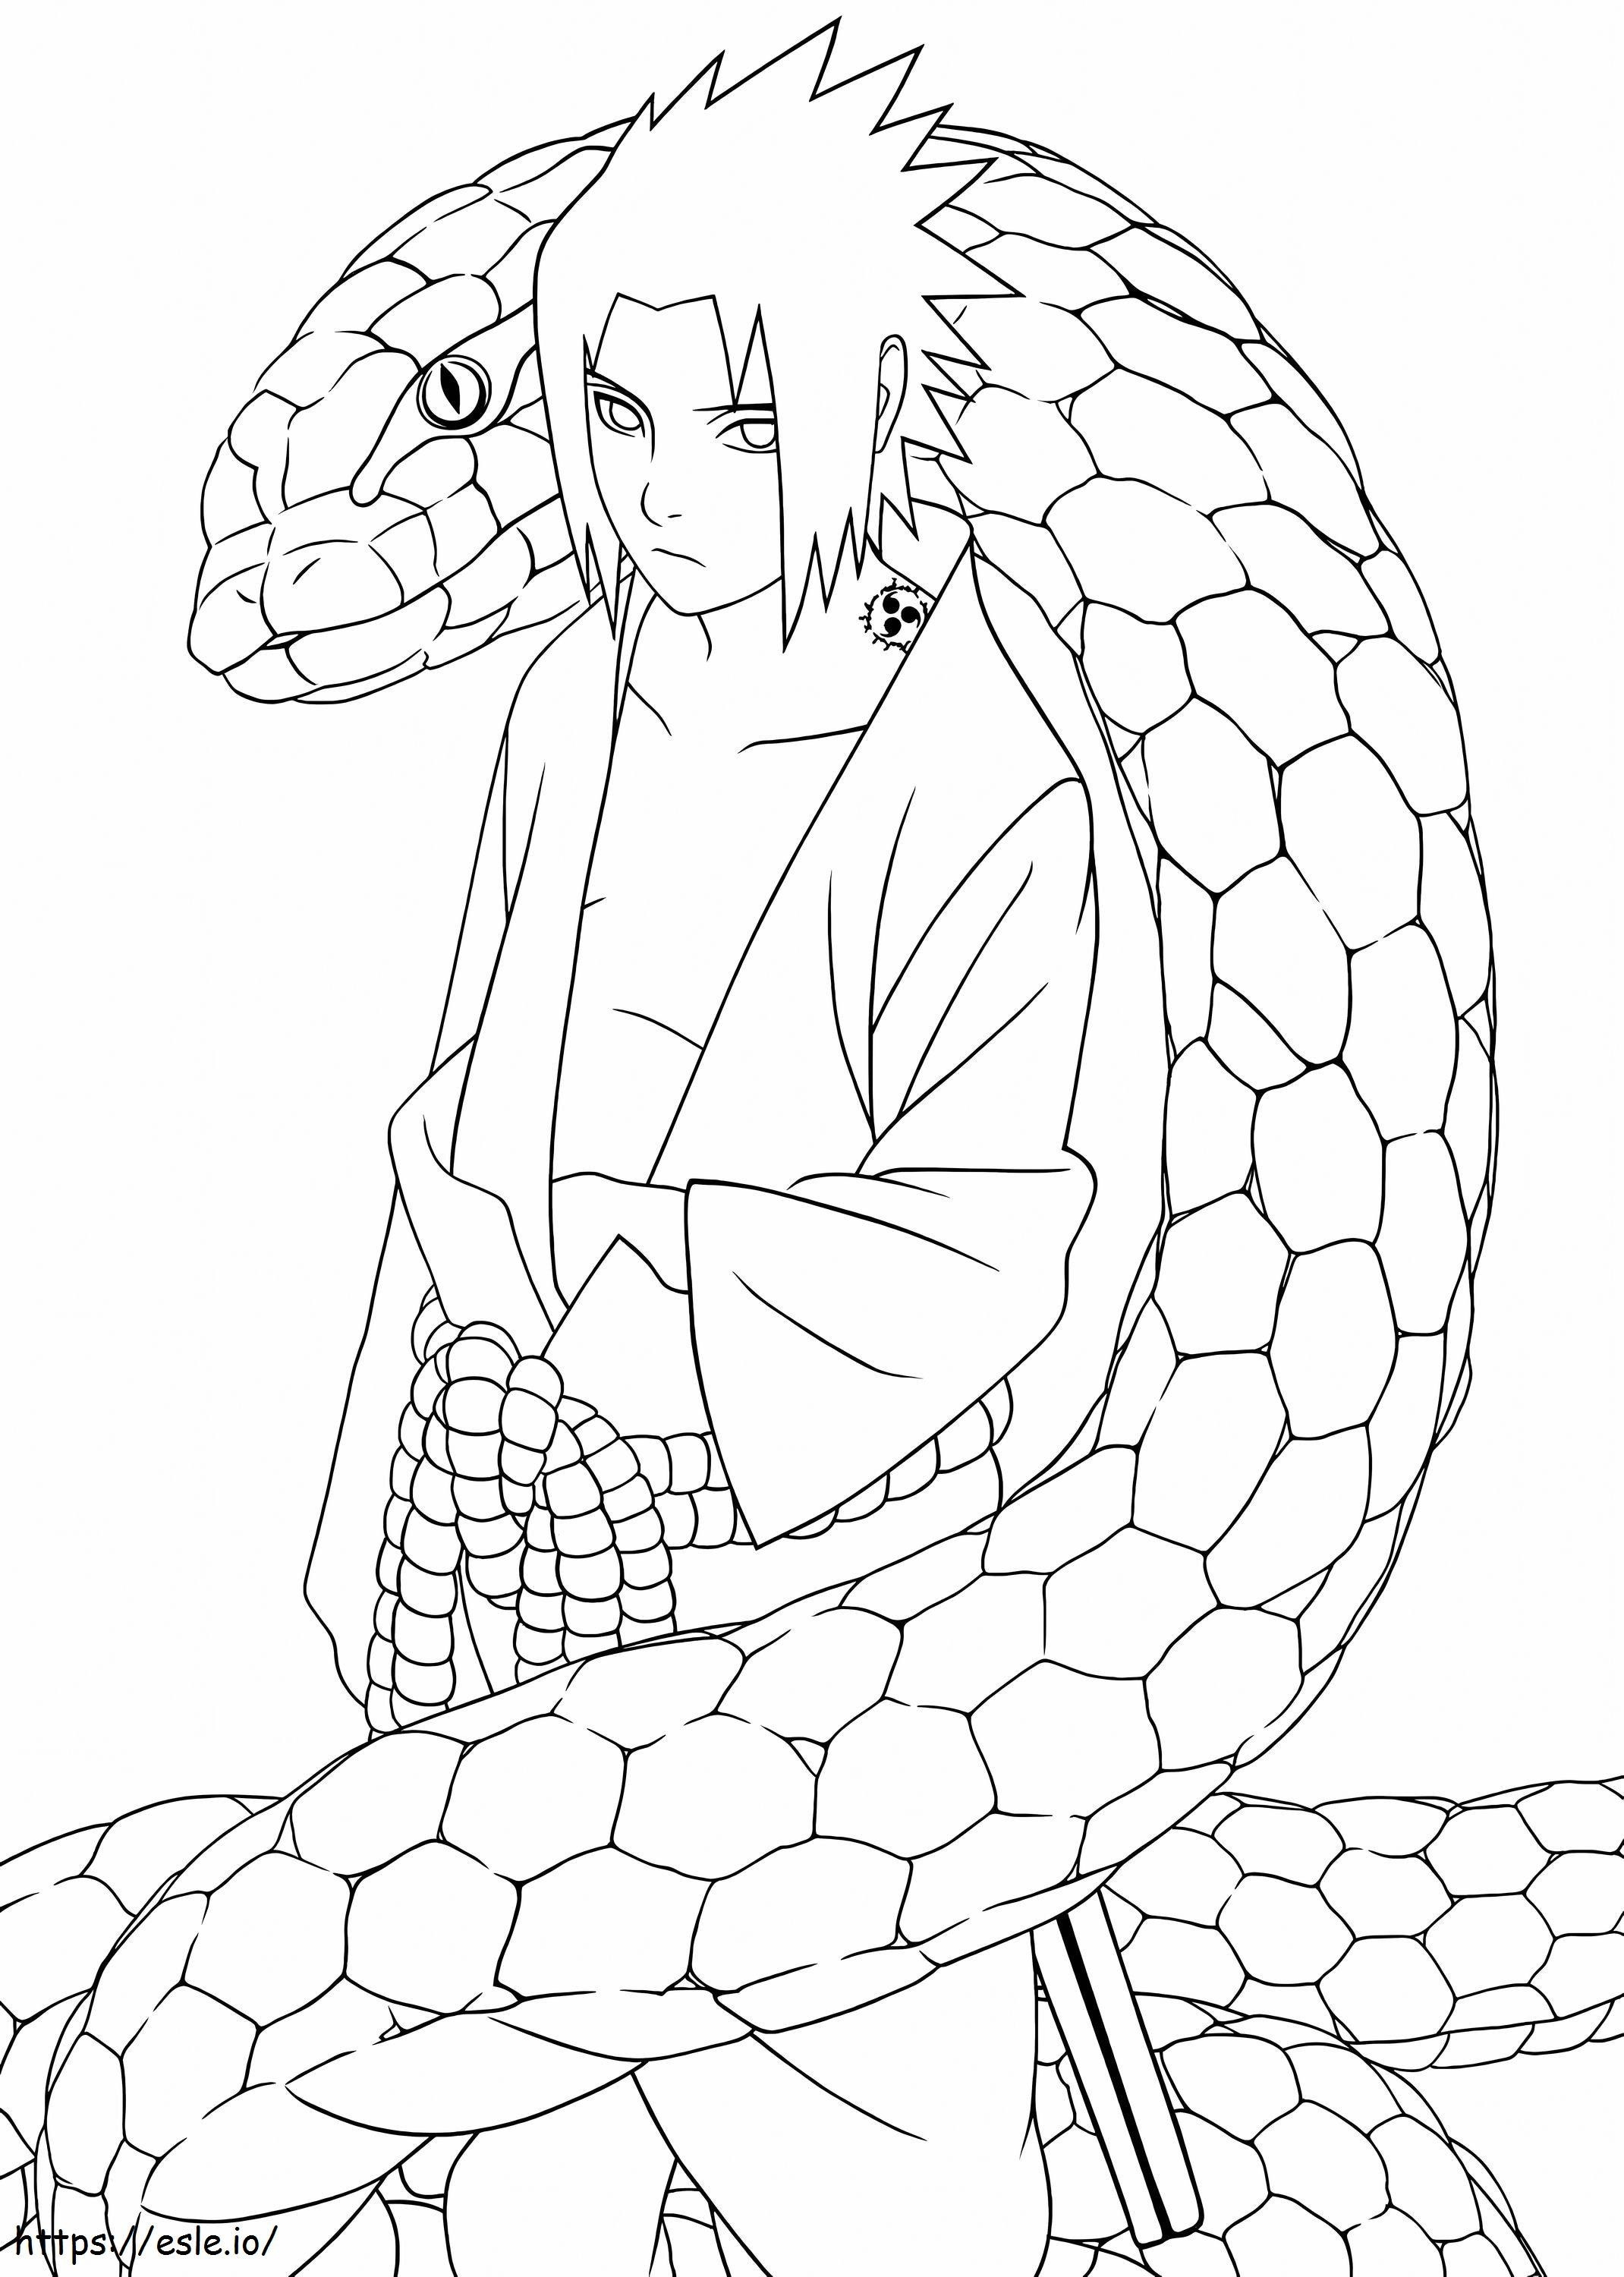 Sasuke ja Snake värityskuva